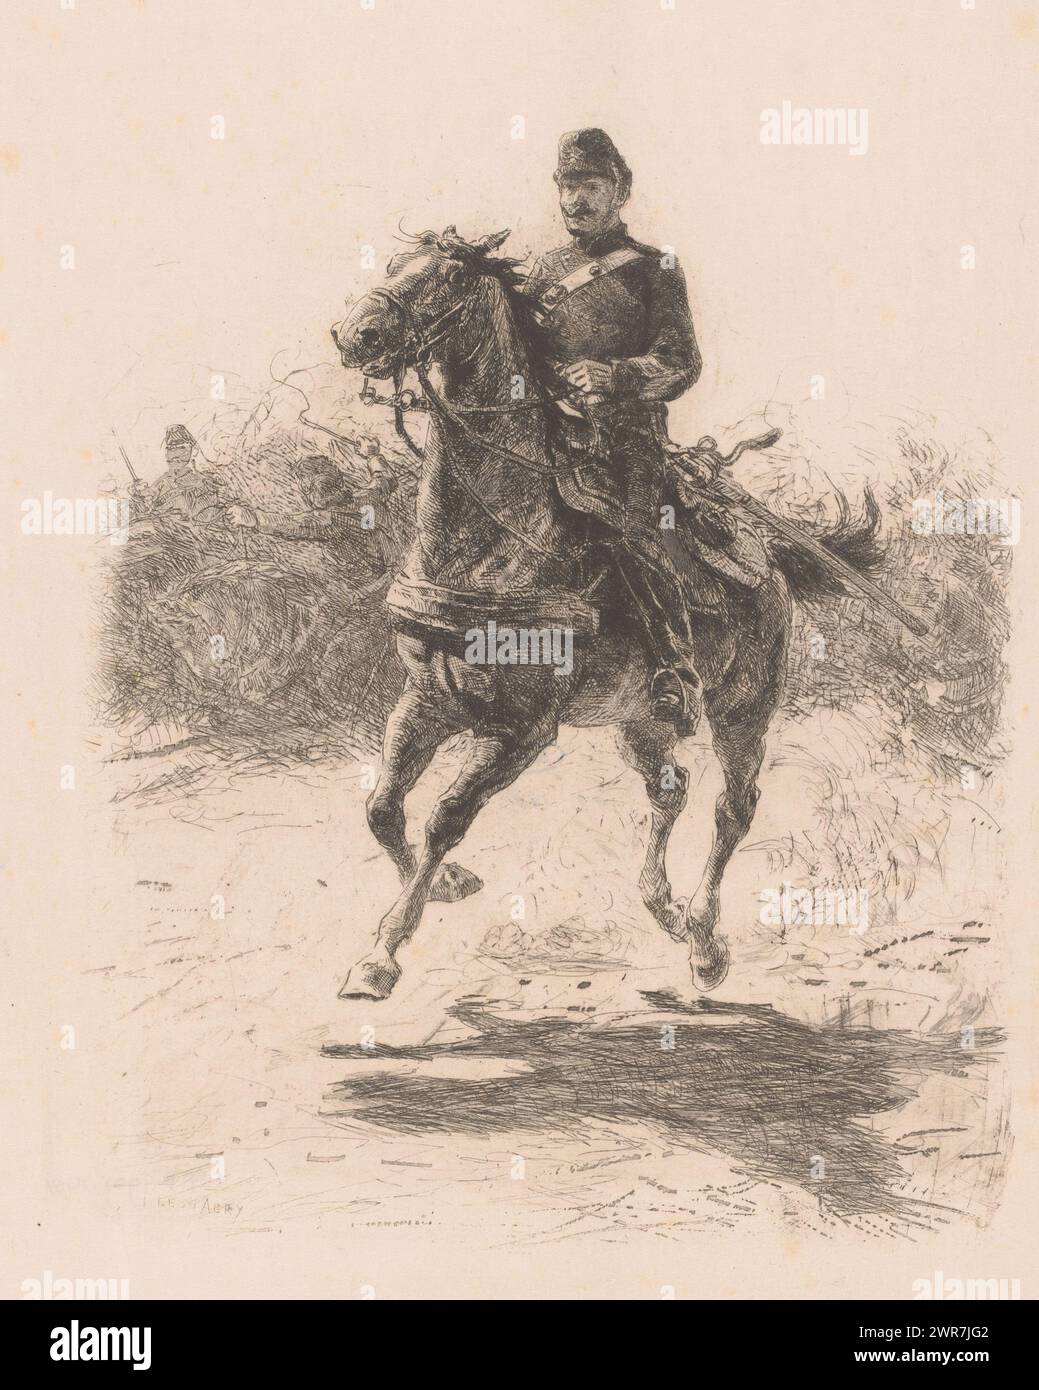 Artillery officer on horseback, print maker: Leon Eugène Auguste Abry, 1880, paper, etching, height 378 mm × width 288 mm, print Stock Photo